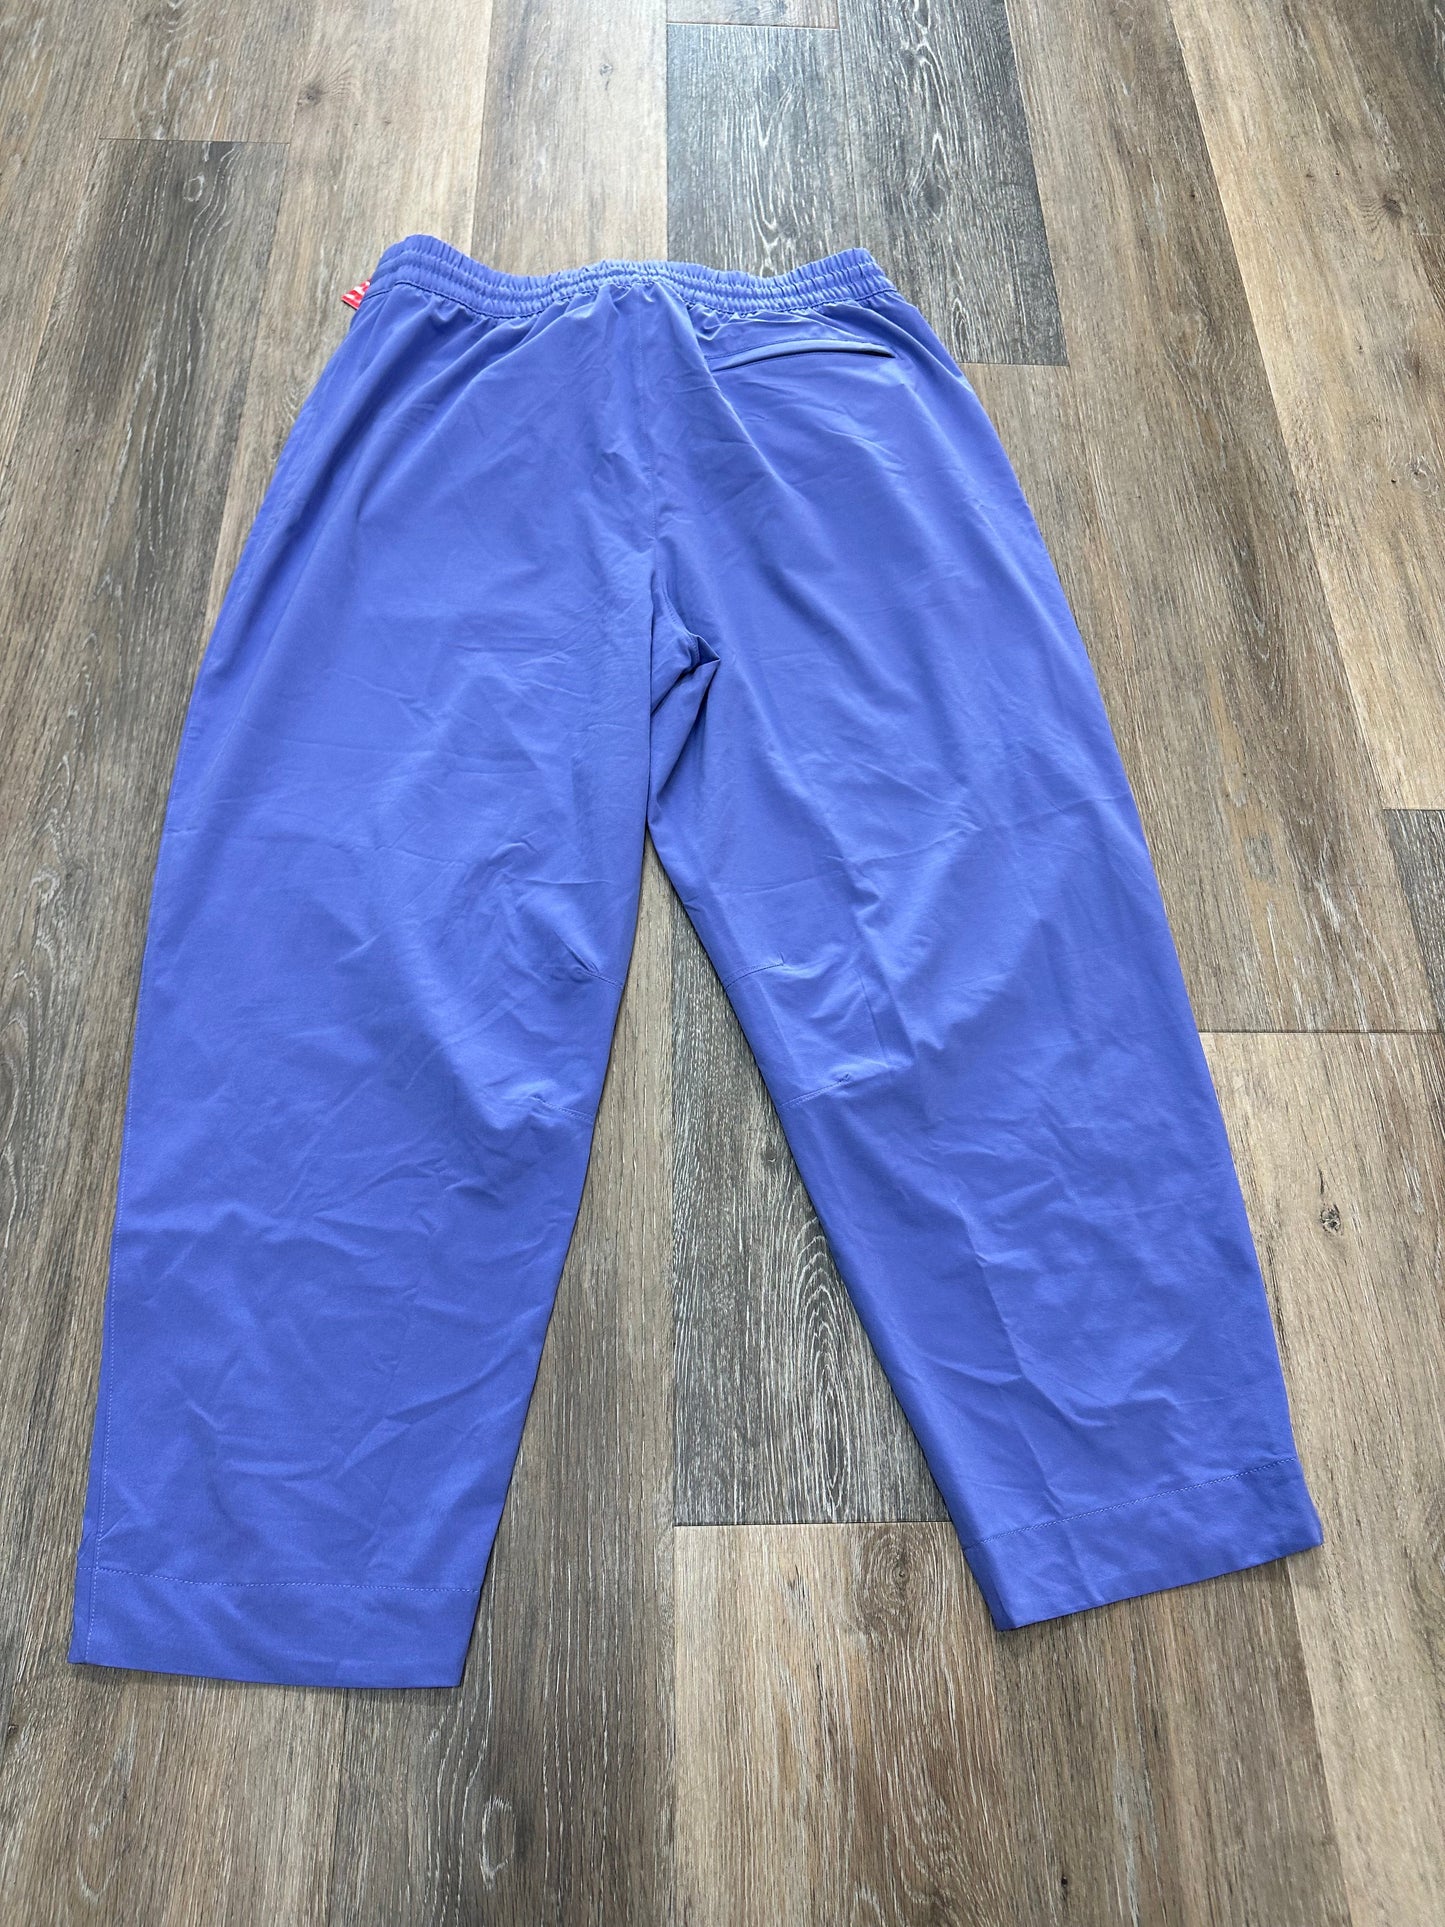 Purple Athletic Pants Athleta, Size 12